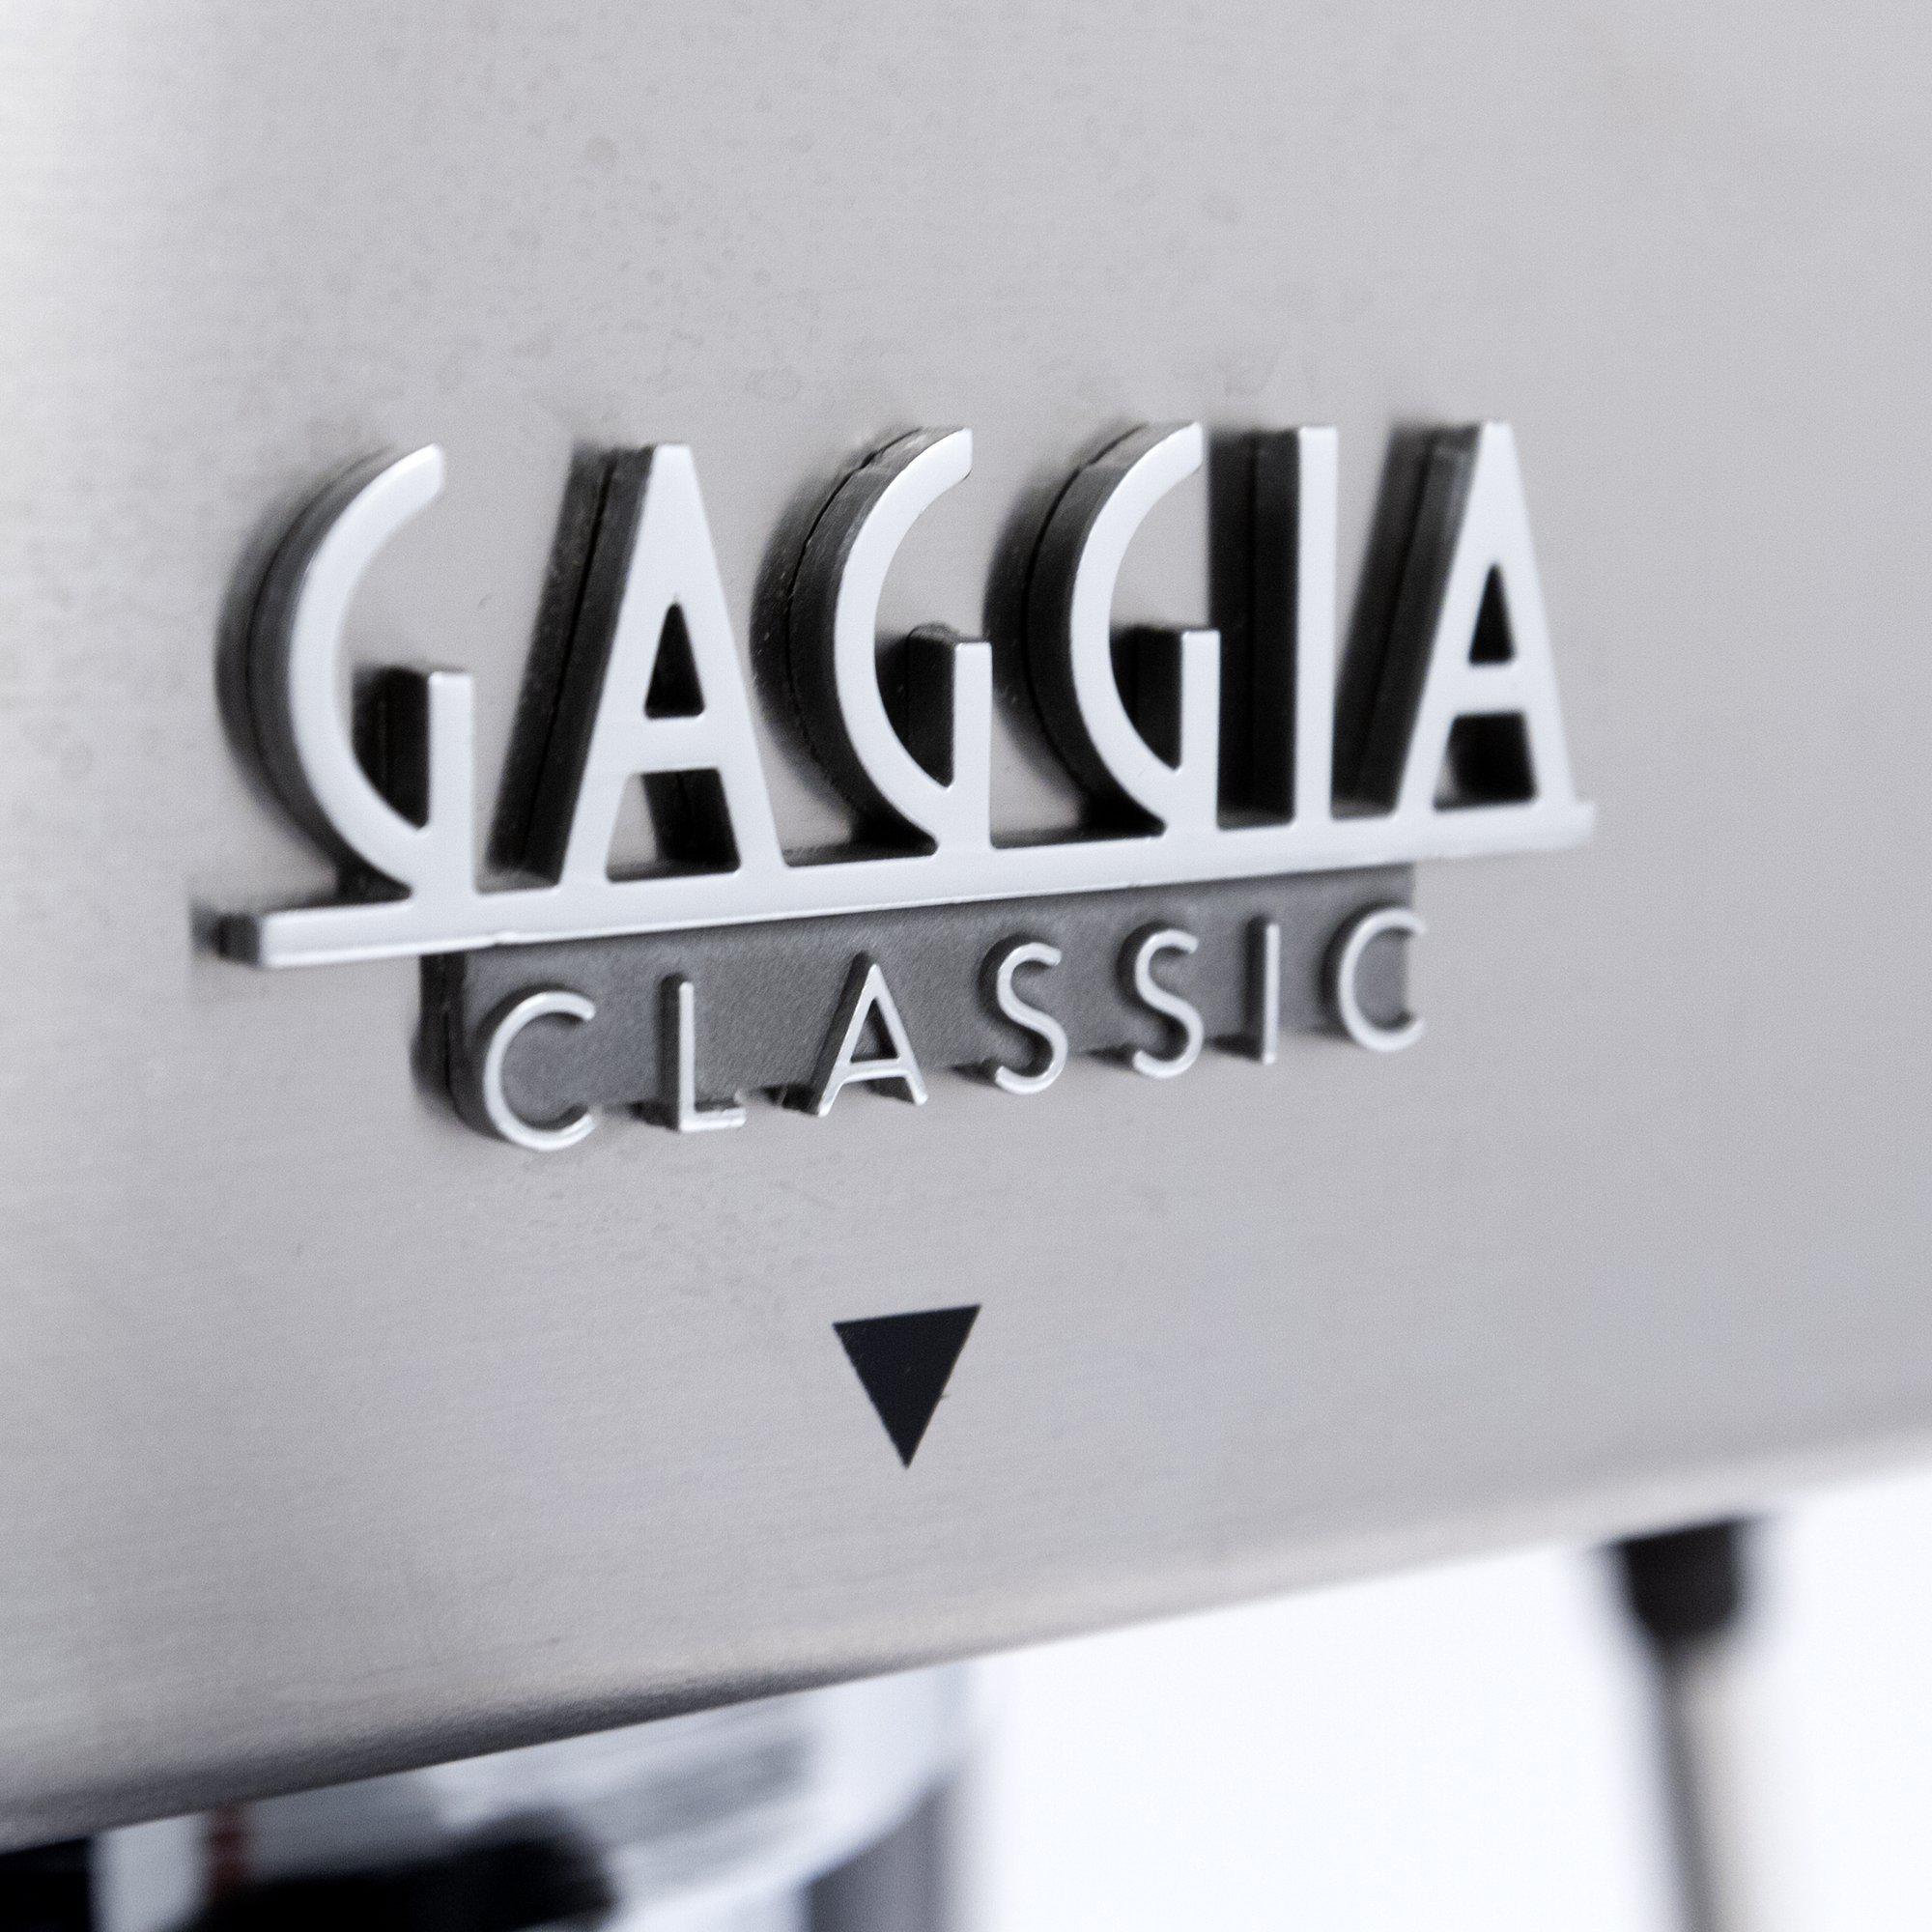 Gaggia Classic Pro Canada Logo and Housing